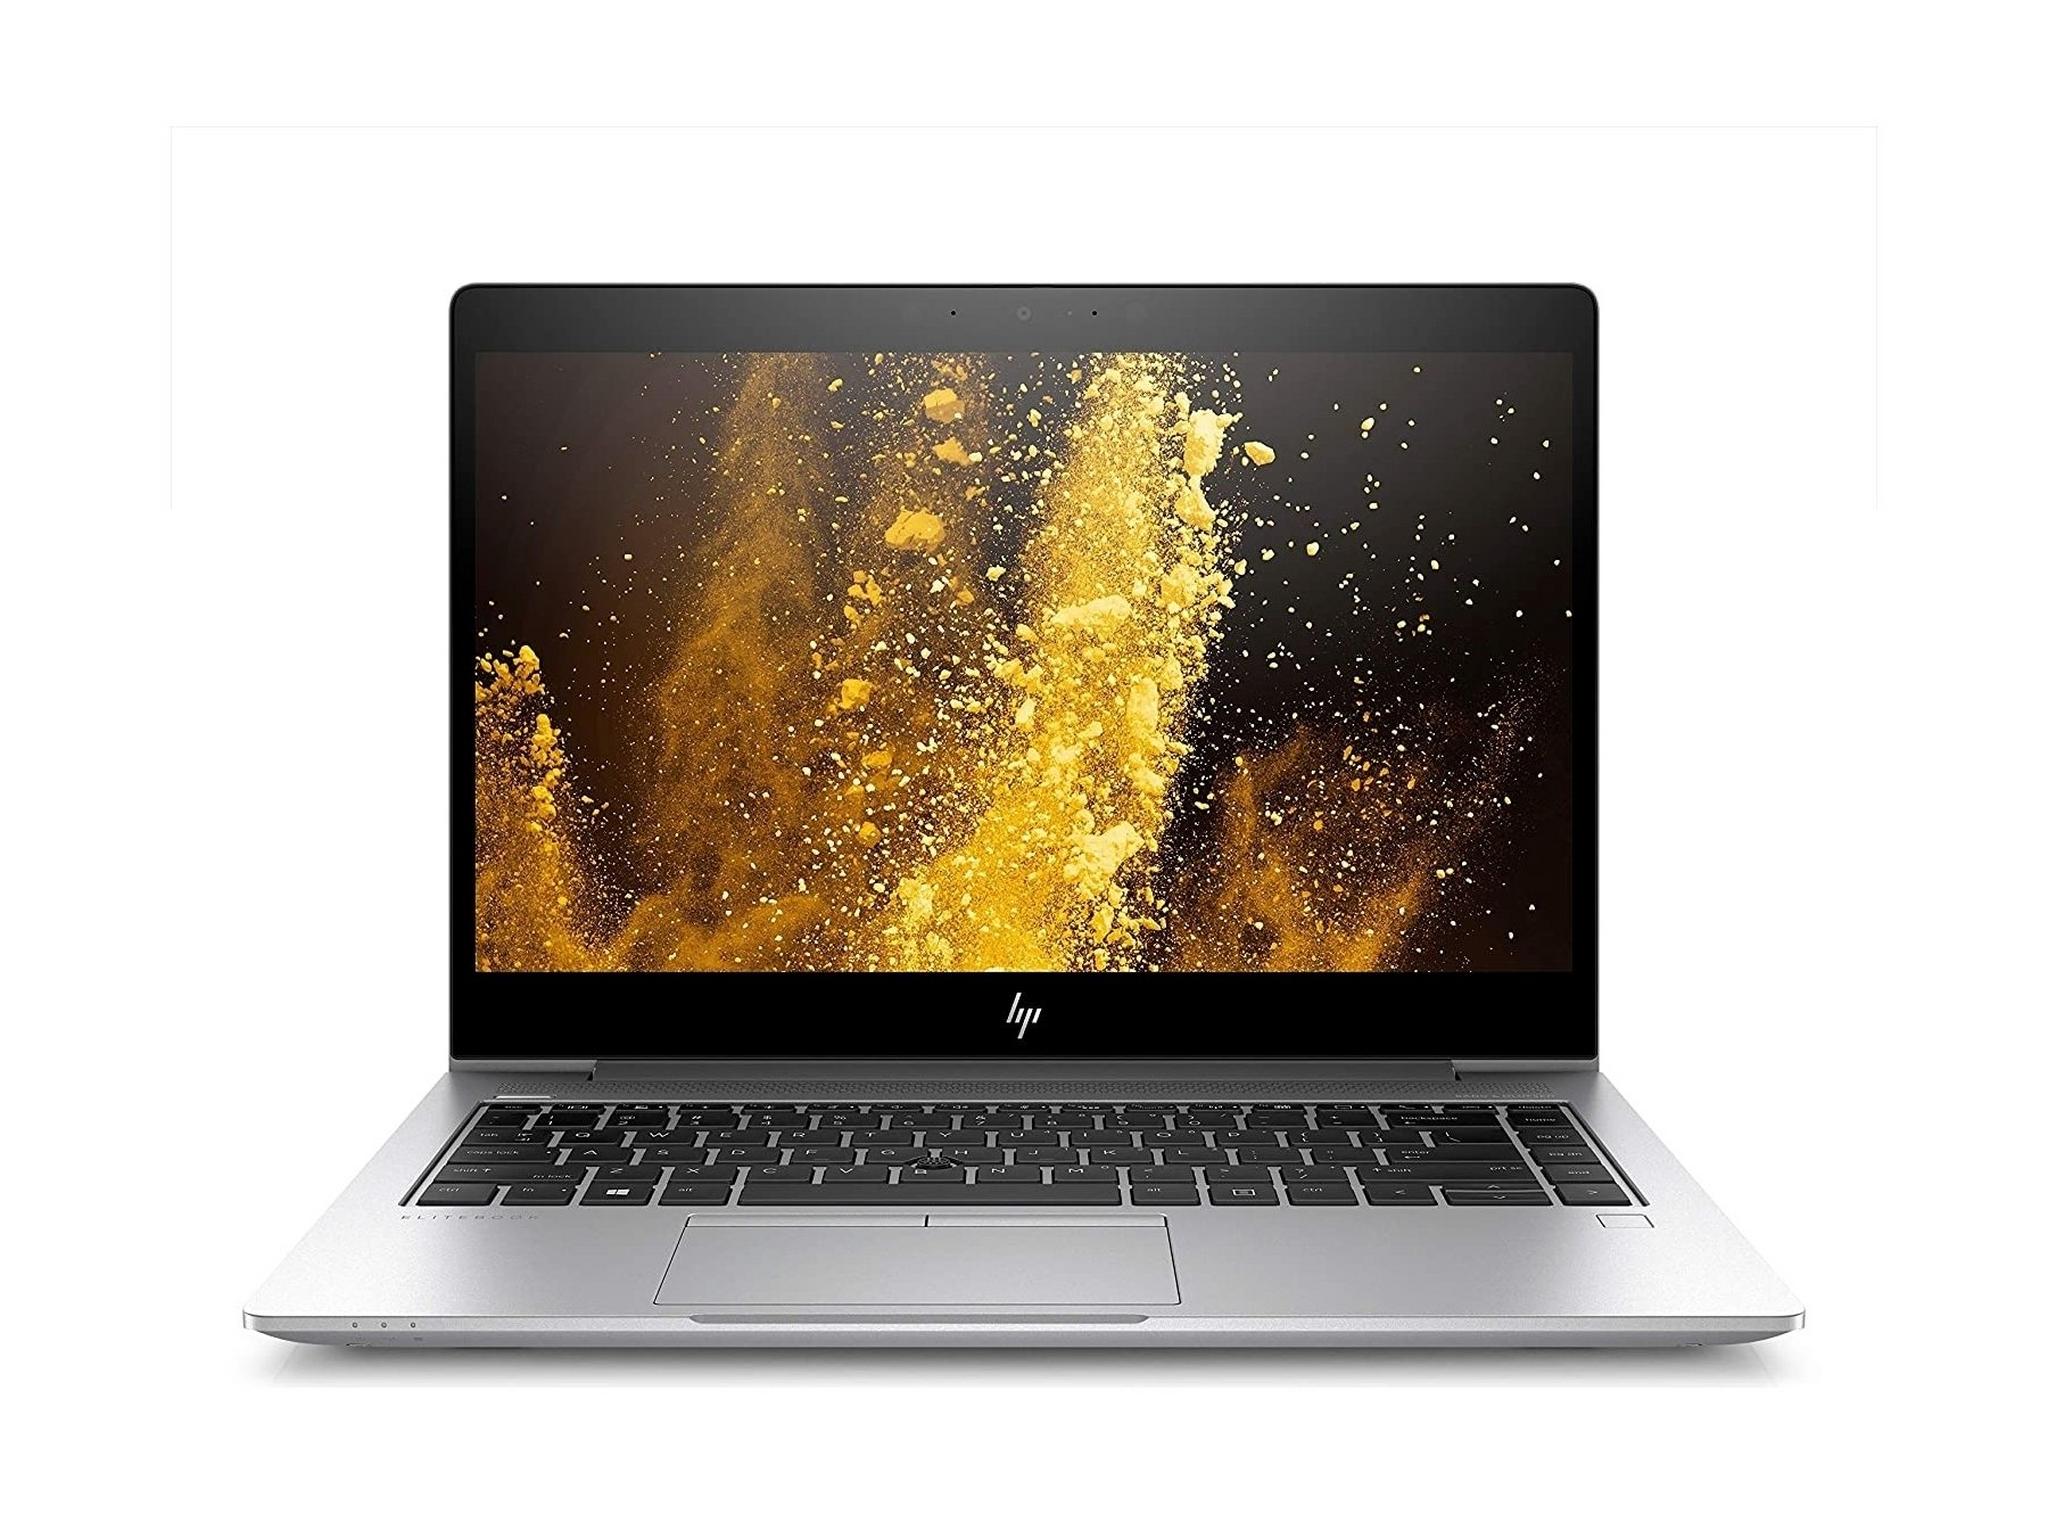 HP Elitebook 850 Intel Core i7 16GB RAM 512GB SSD 15.6" Laptop - Silver